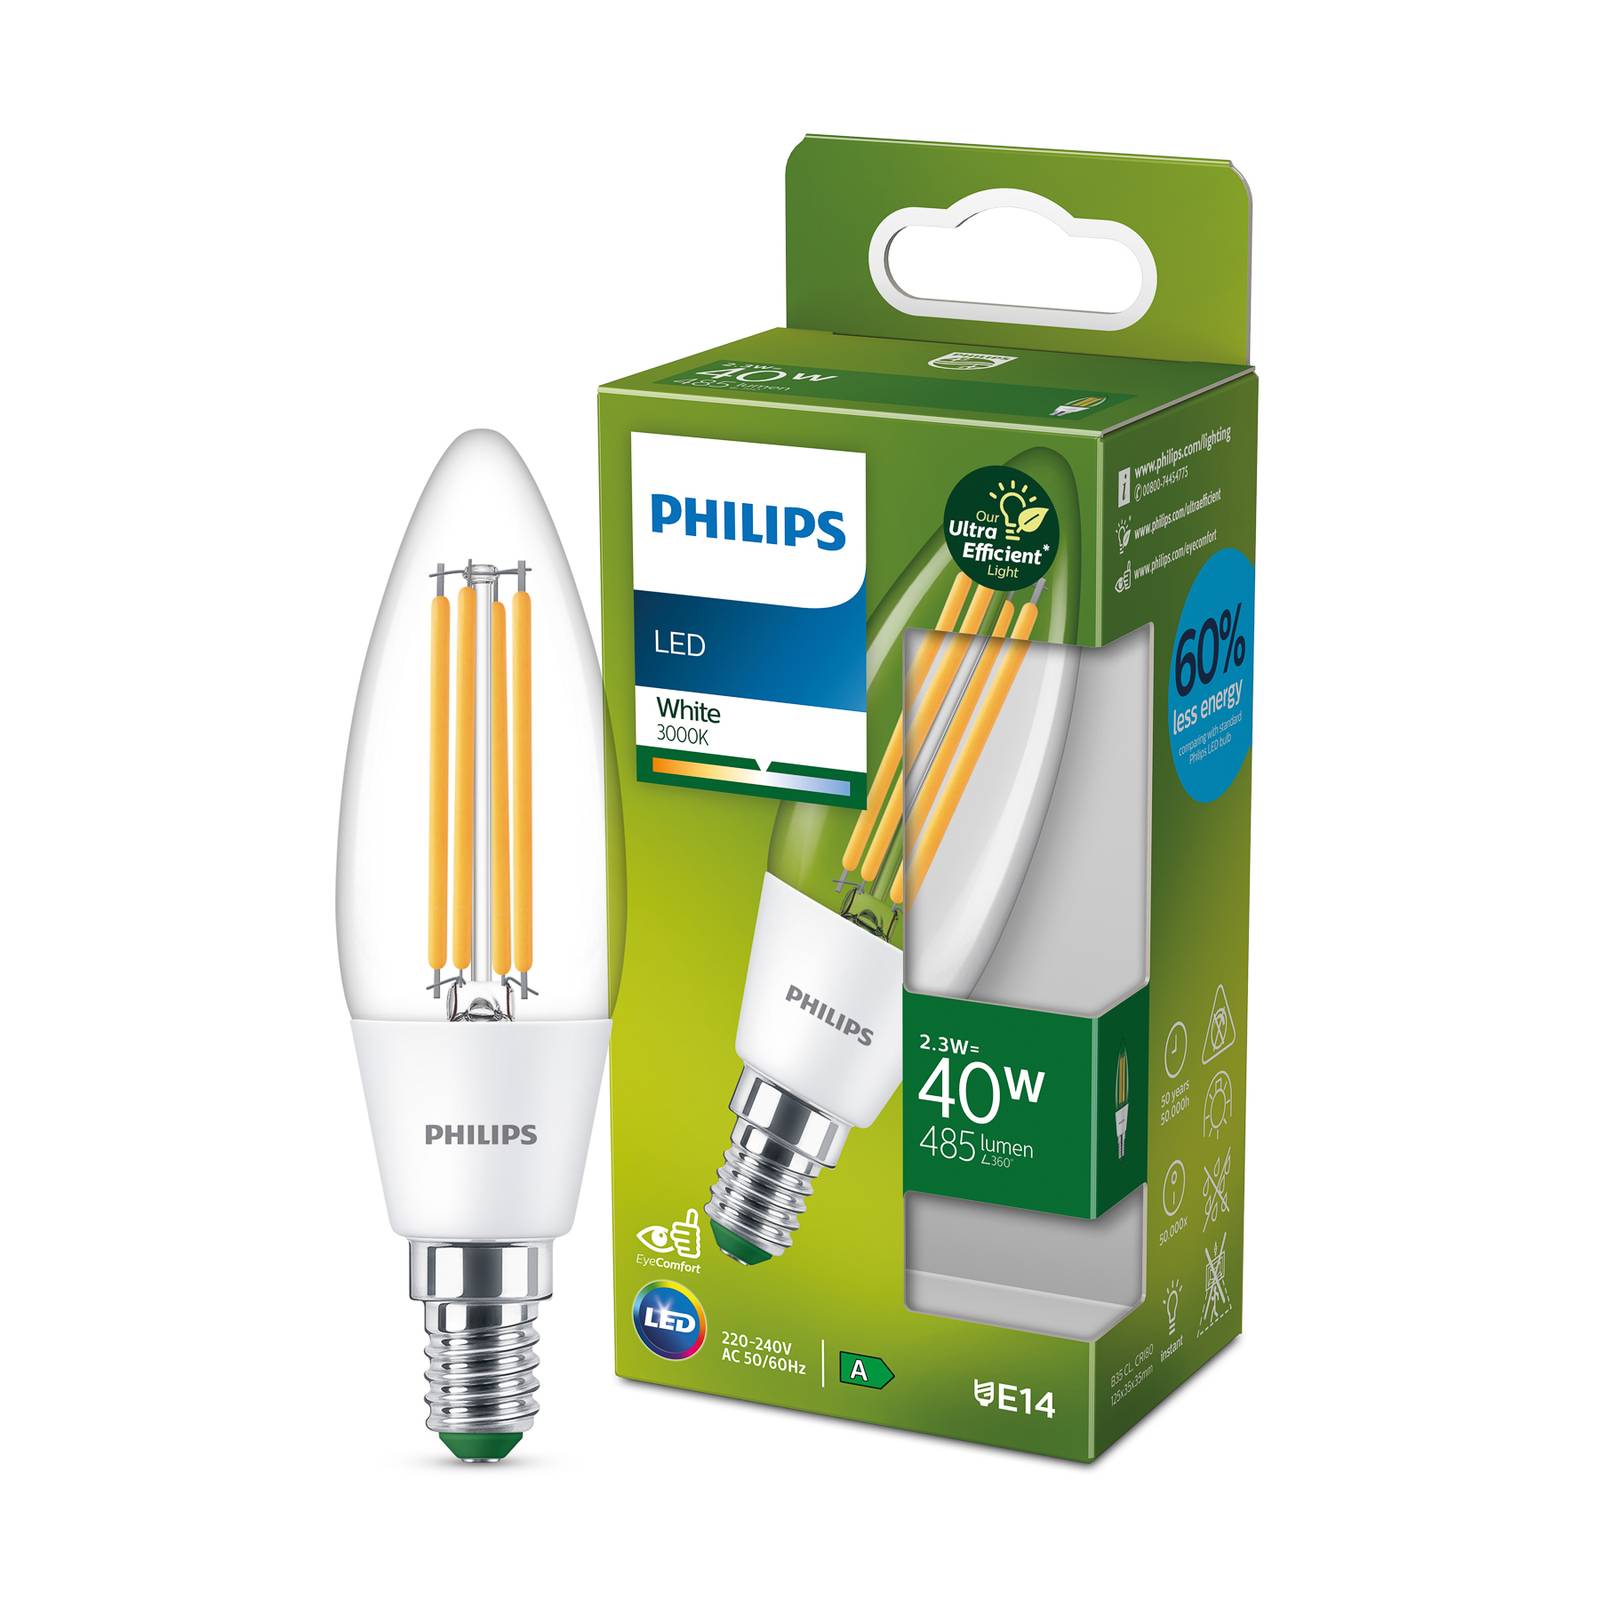 Philips Philips LED svíčka E14 2,3W 485lm čirá 3 000K